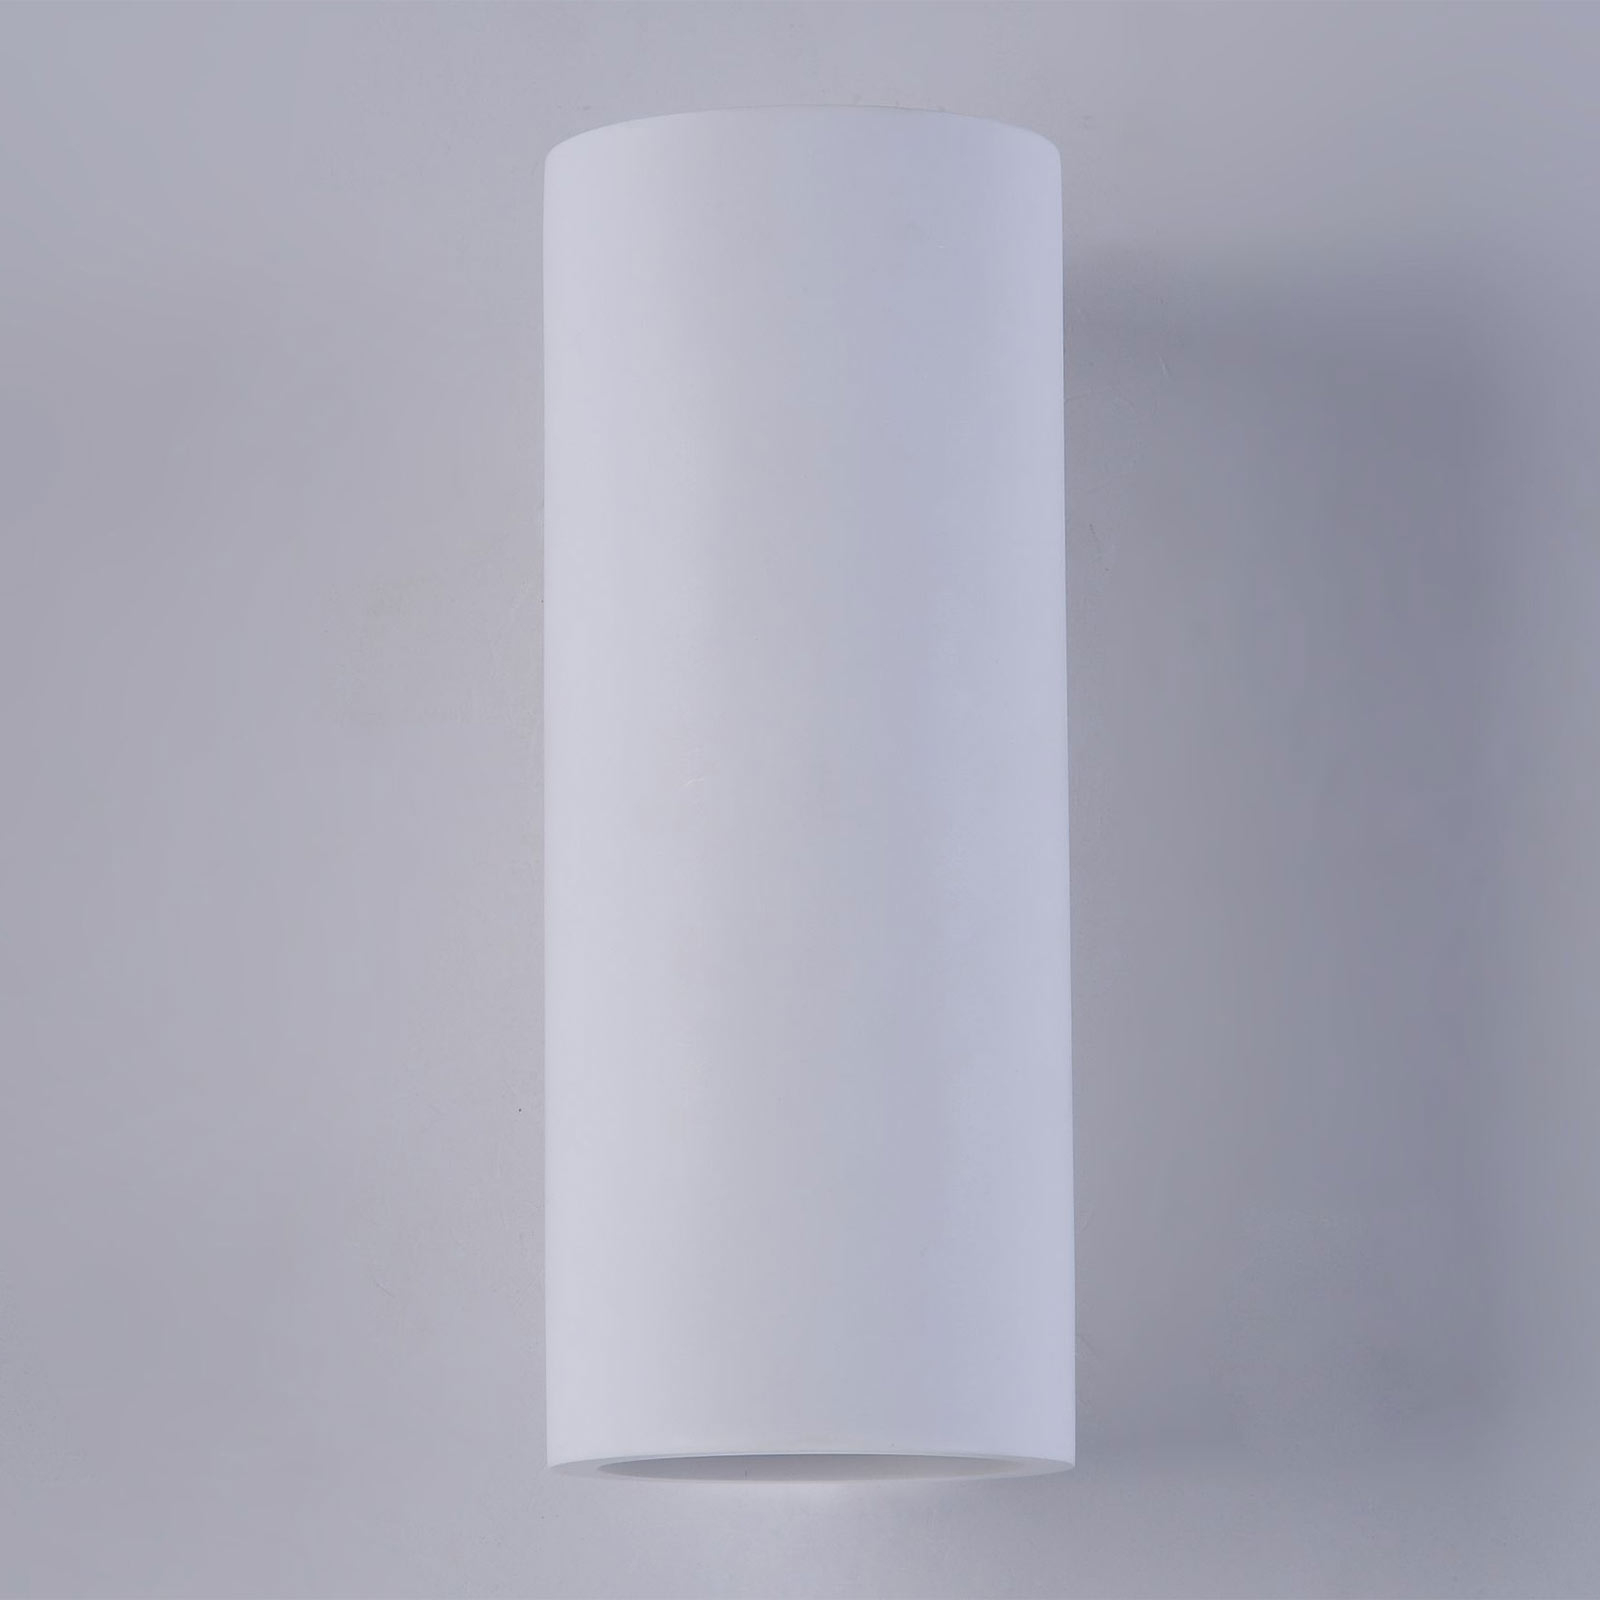 Parma wall light, plaster, 8 x 20 cm